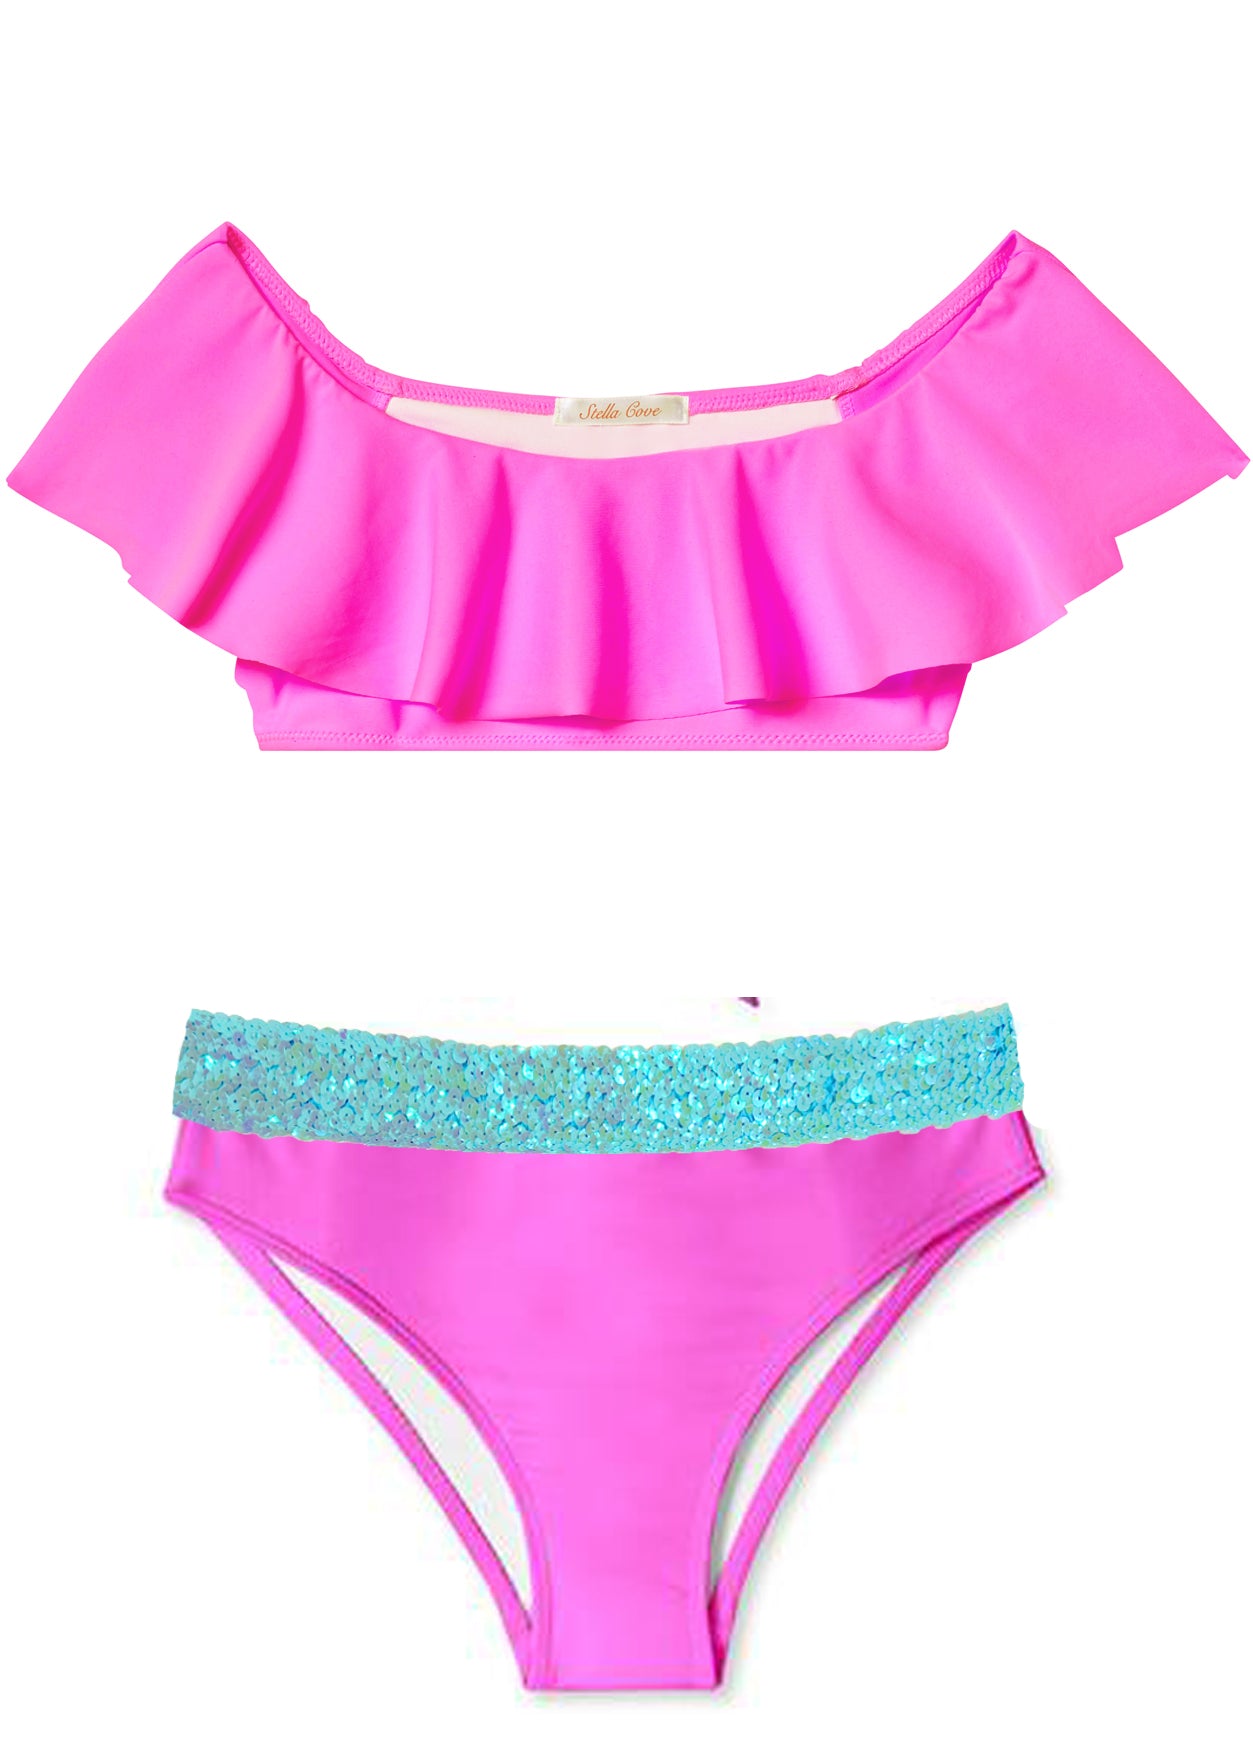 Neon Pink Ruffle Bikini with Aqua Sequin Belt